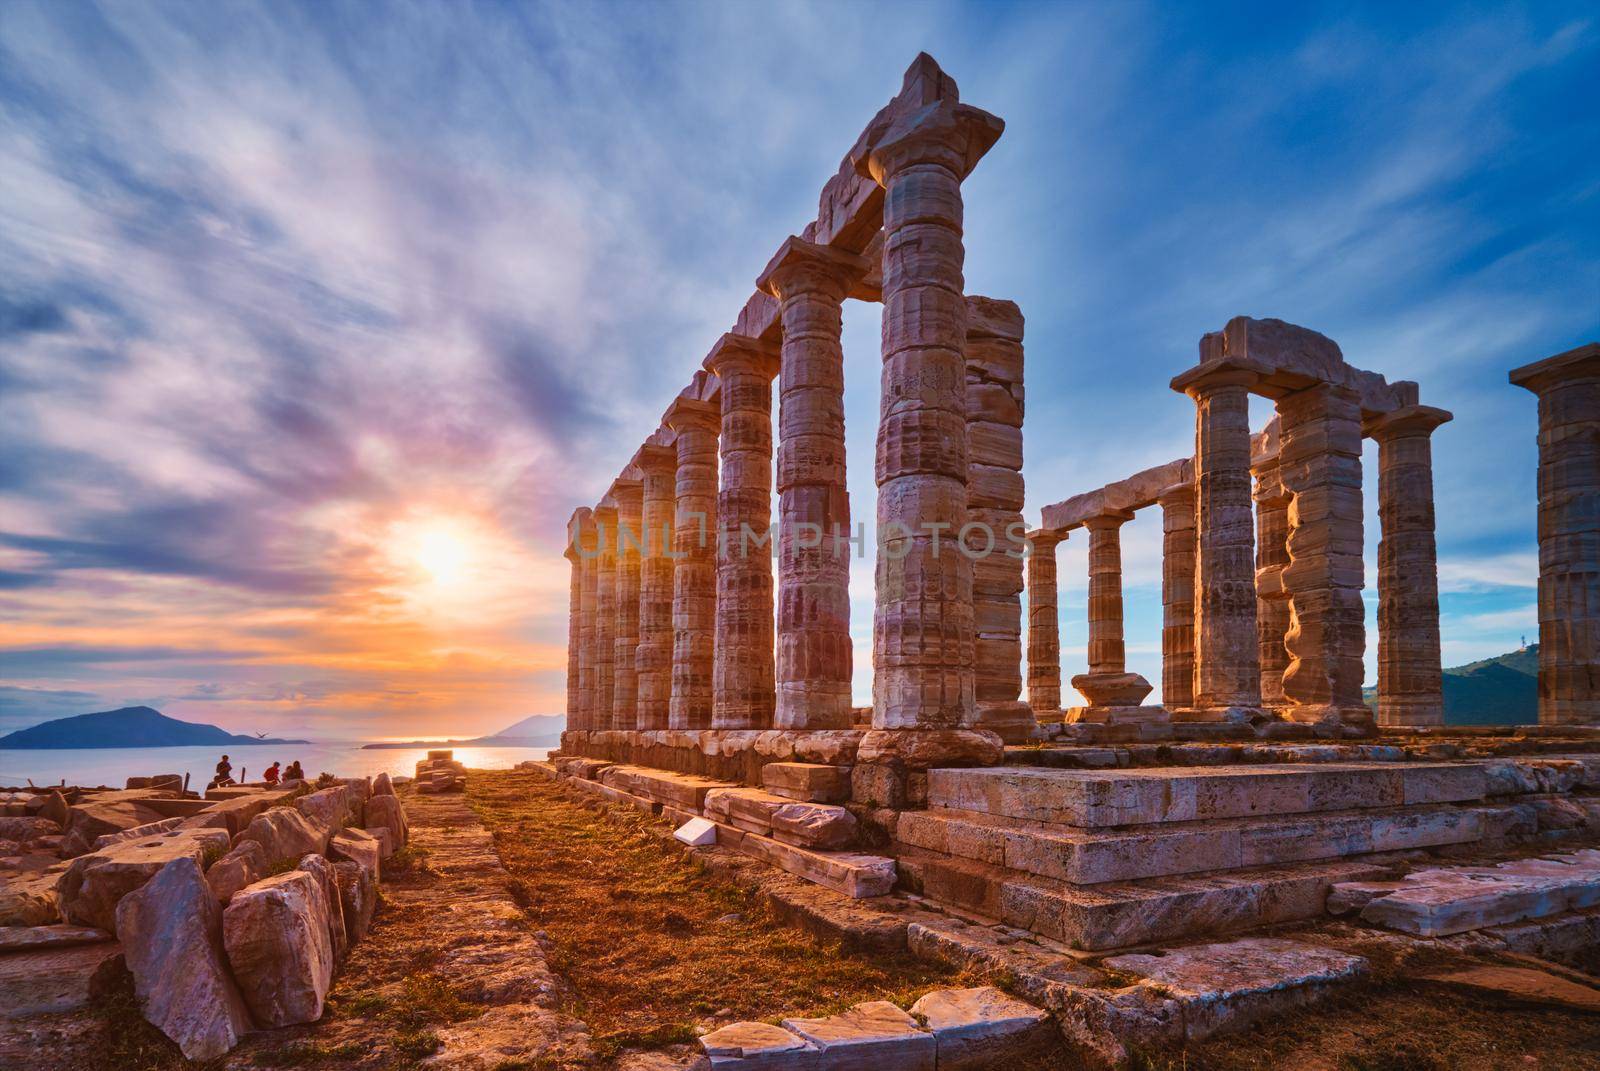 Poseidon temple ruins on Cape Sounio on sunset, Greece by dimol